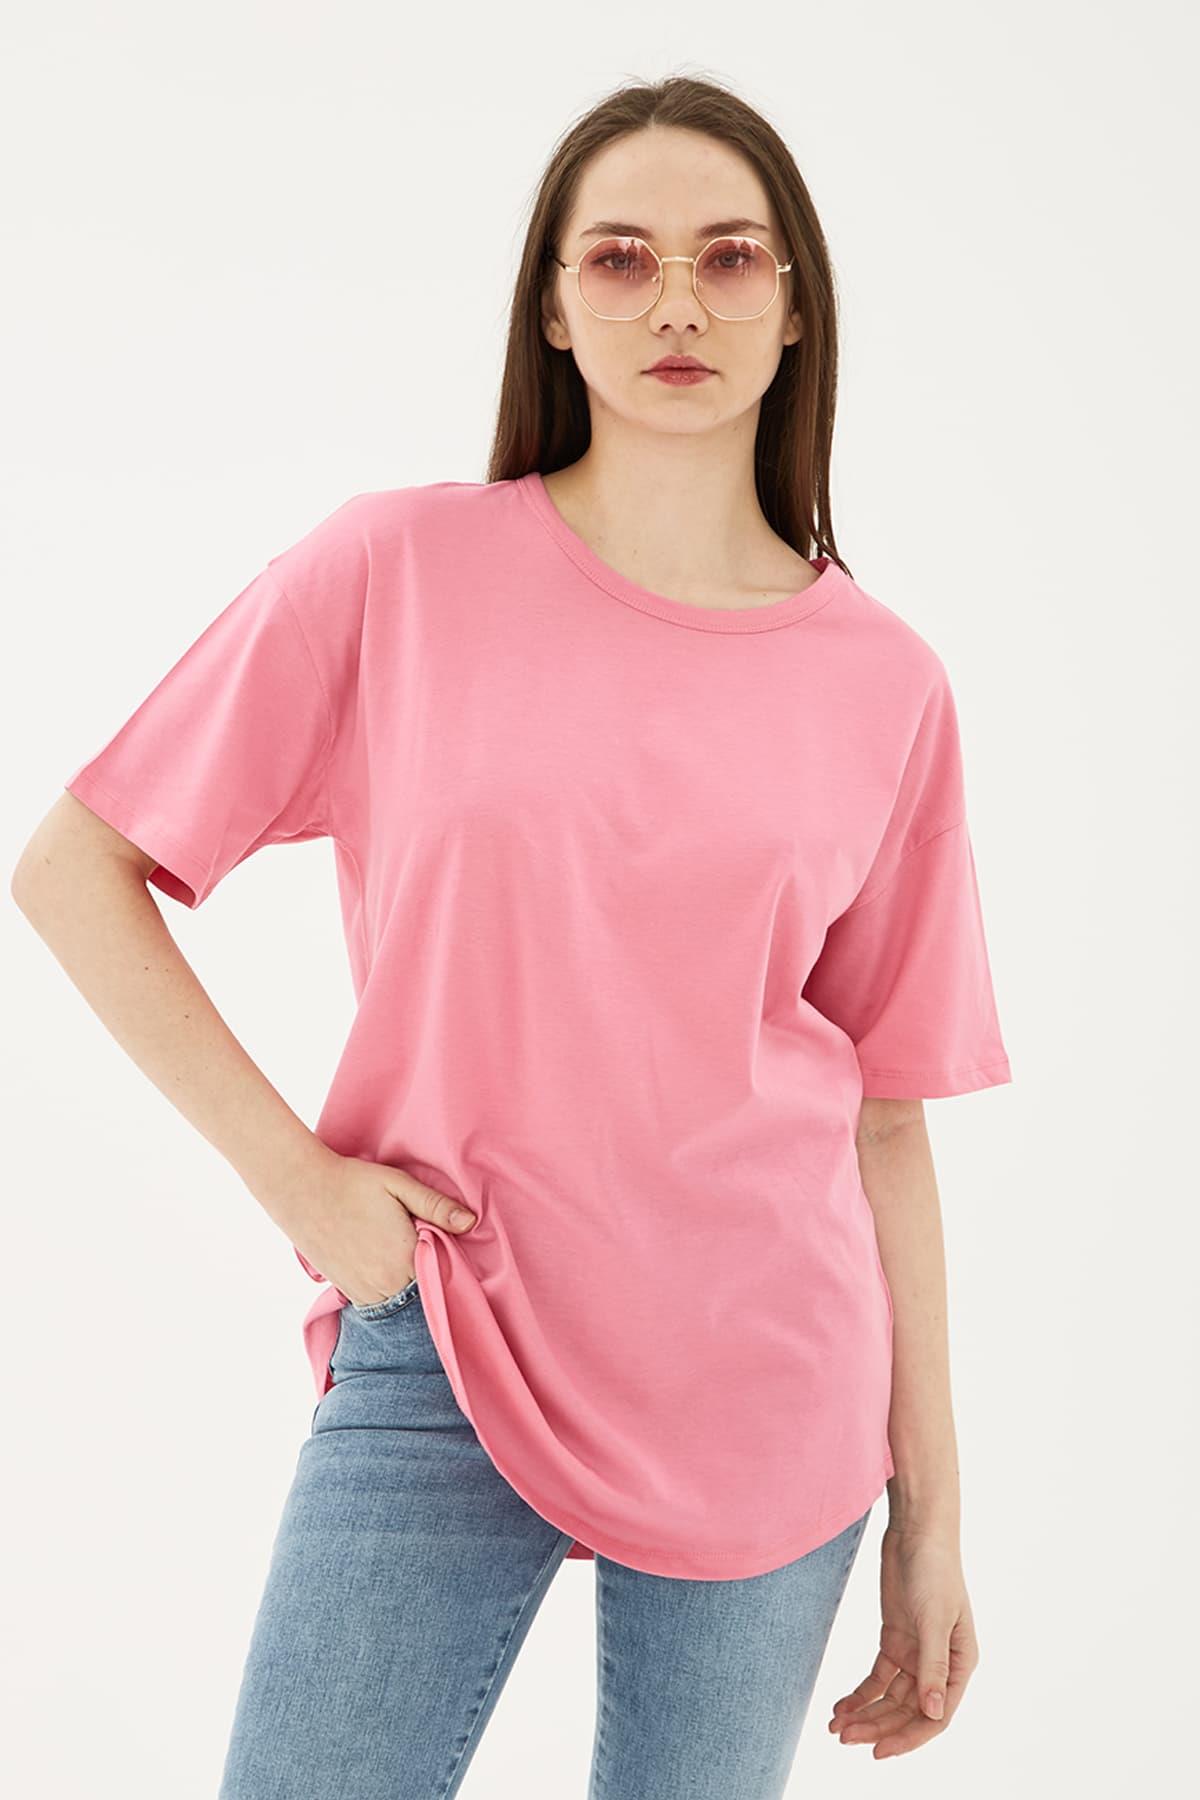 T-Shirt Pembe / Pink | Fashionfriends